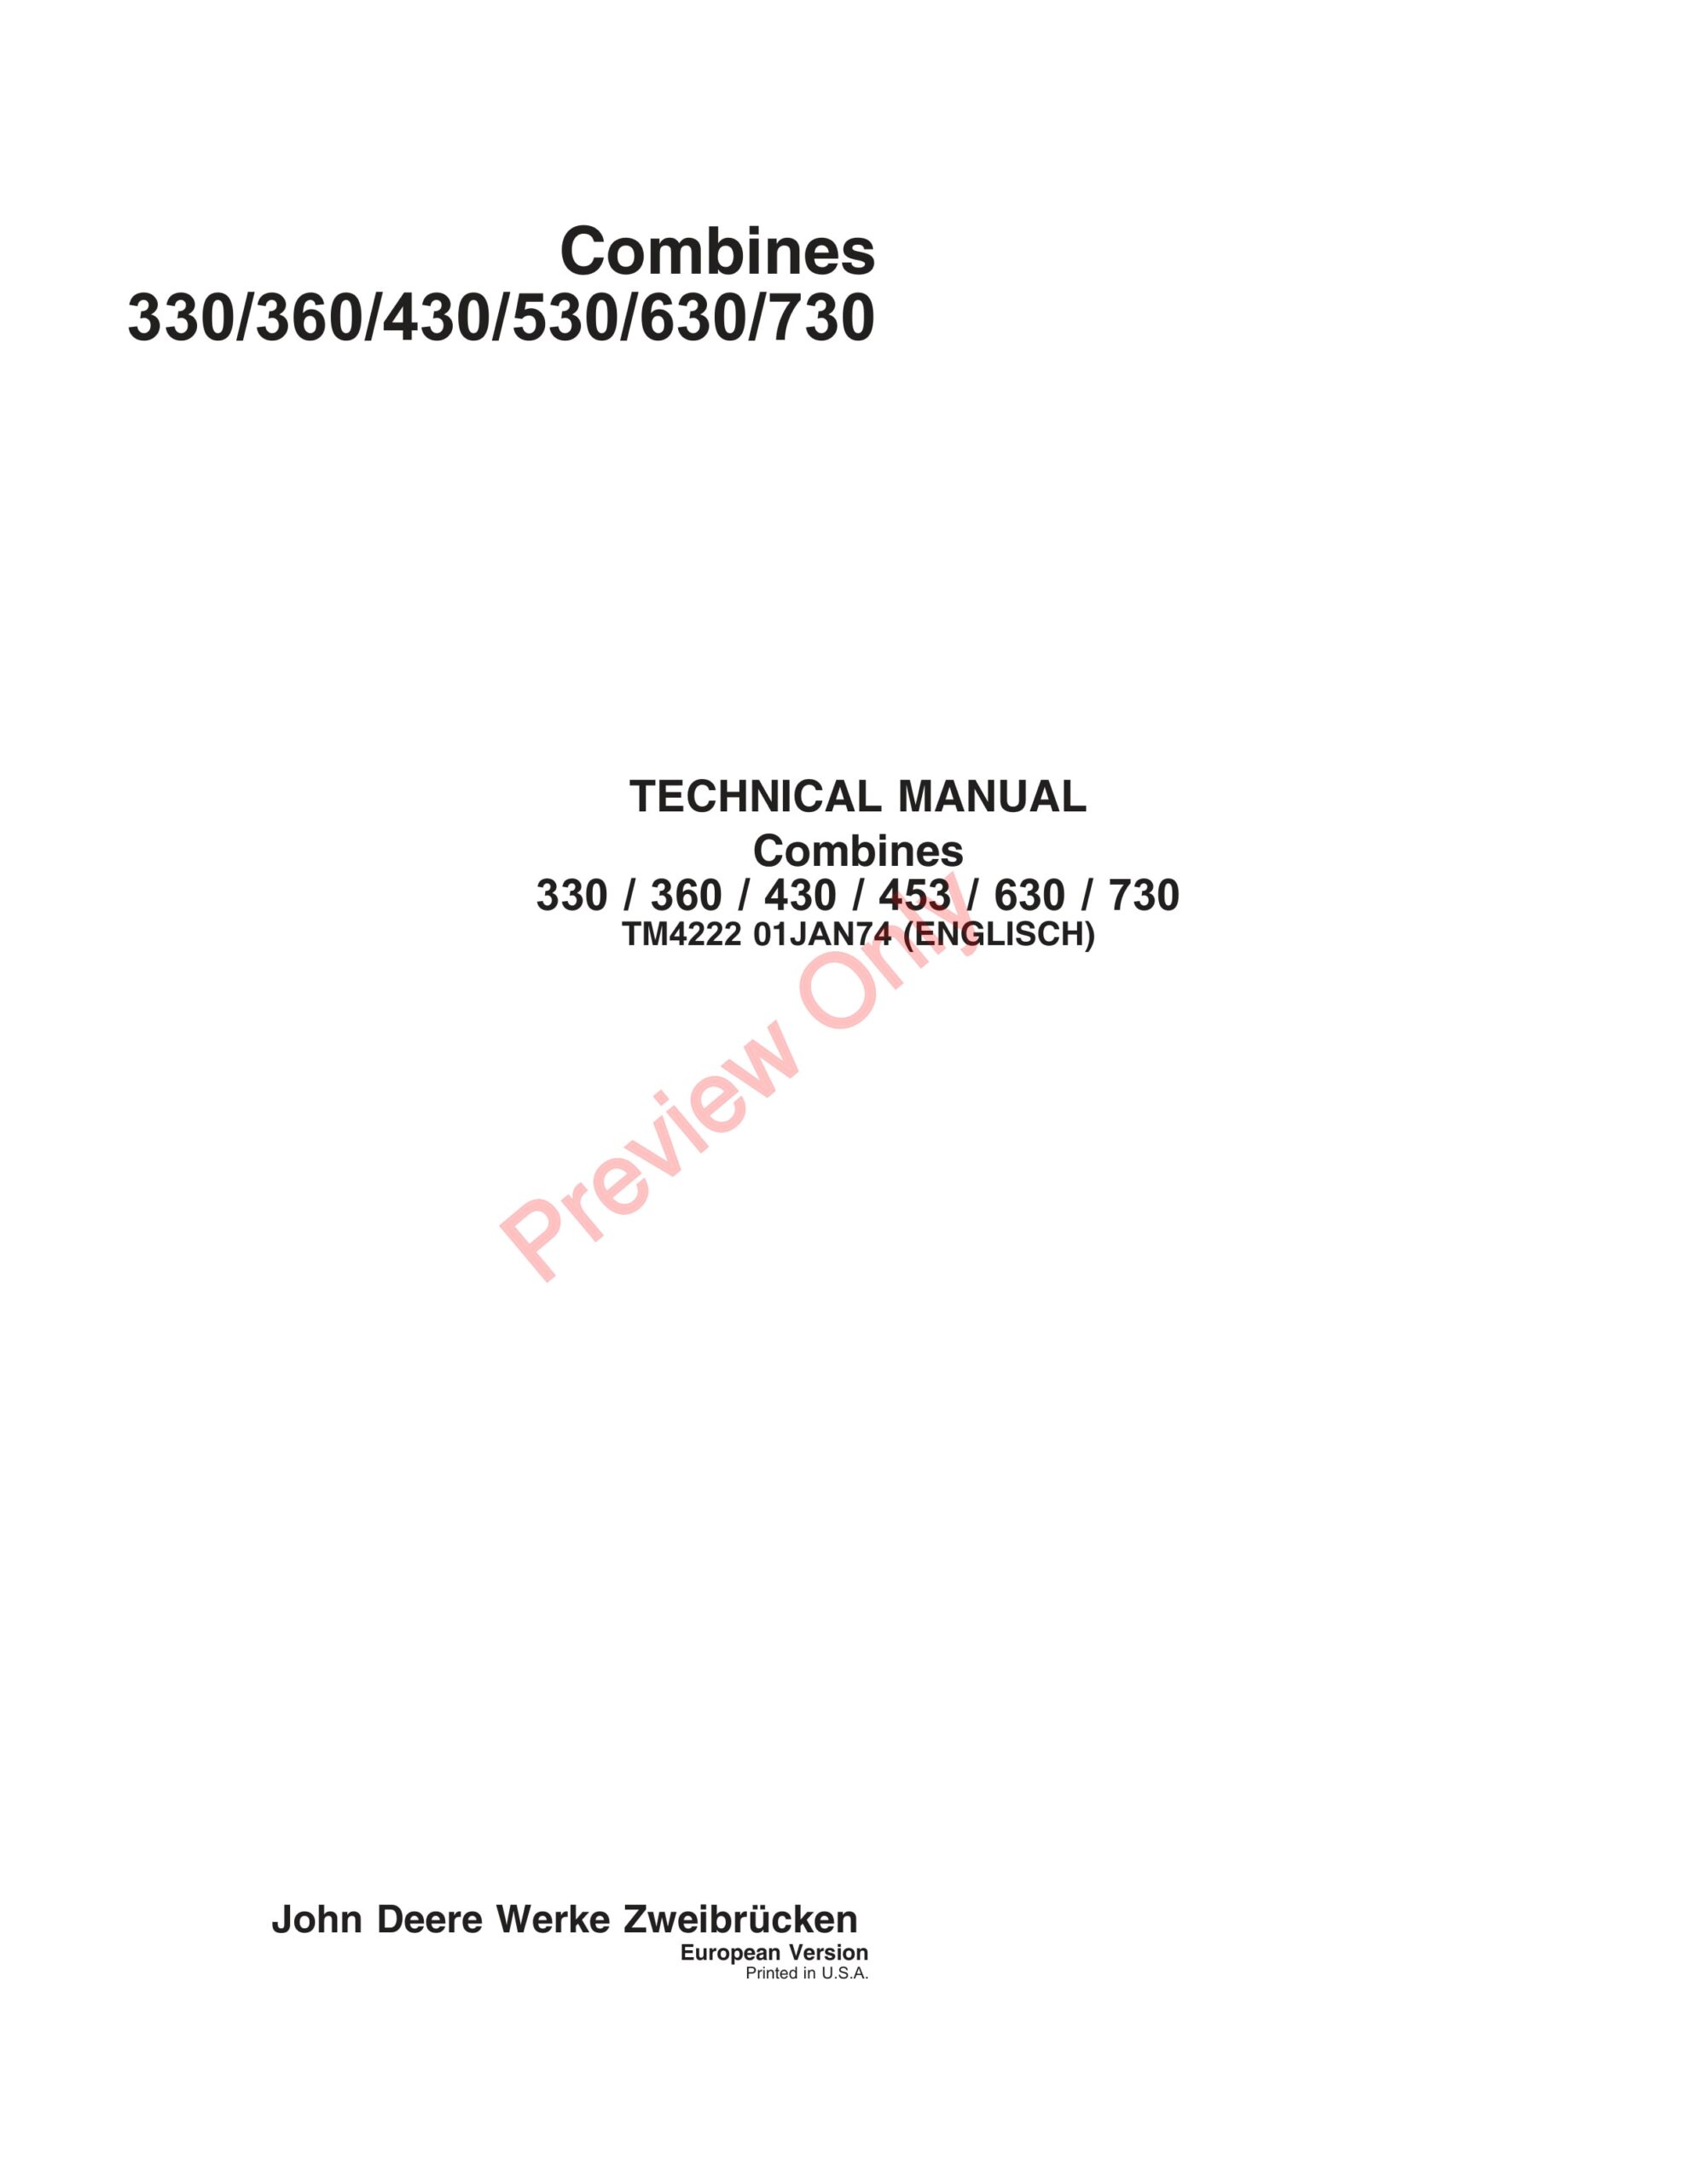 John Deere 330, 360, 430, 530, 630 and 730 Combines Technical Manual TM4222 01JAN74-1